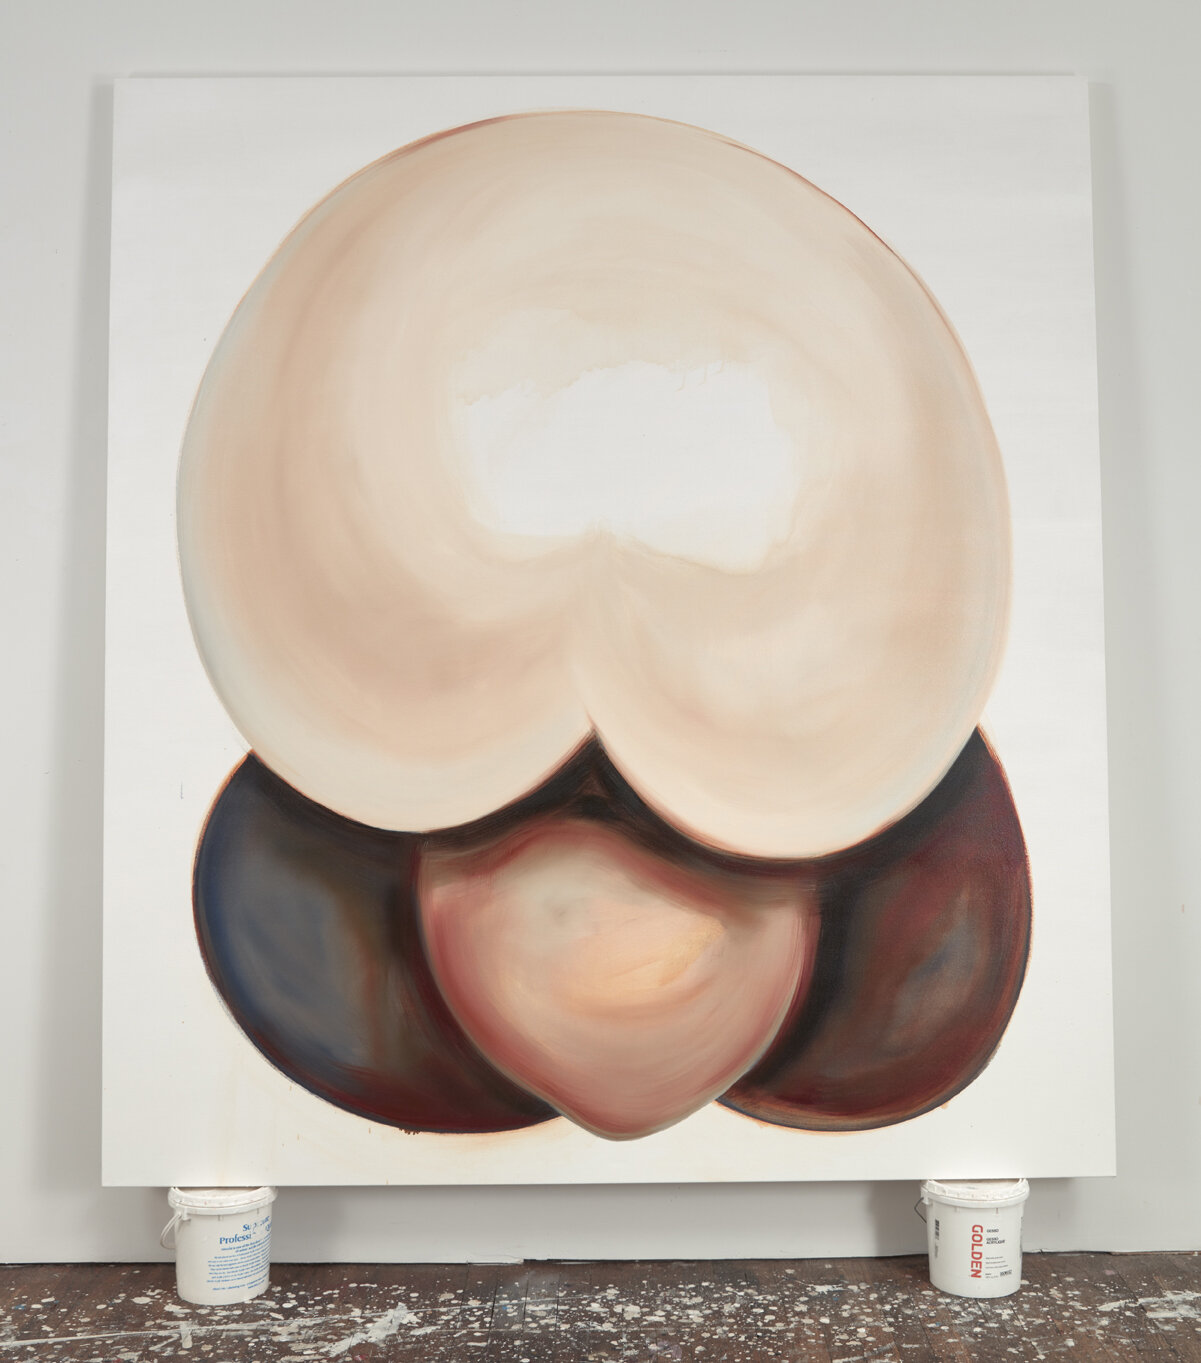 Venus Figure, Fertility Symbol, 2020, oil on canvas, 80 x 72"